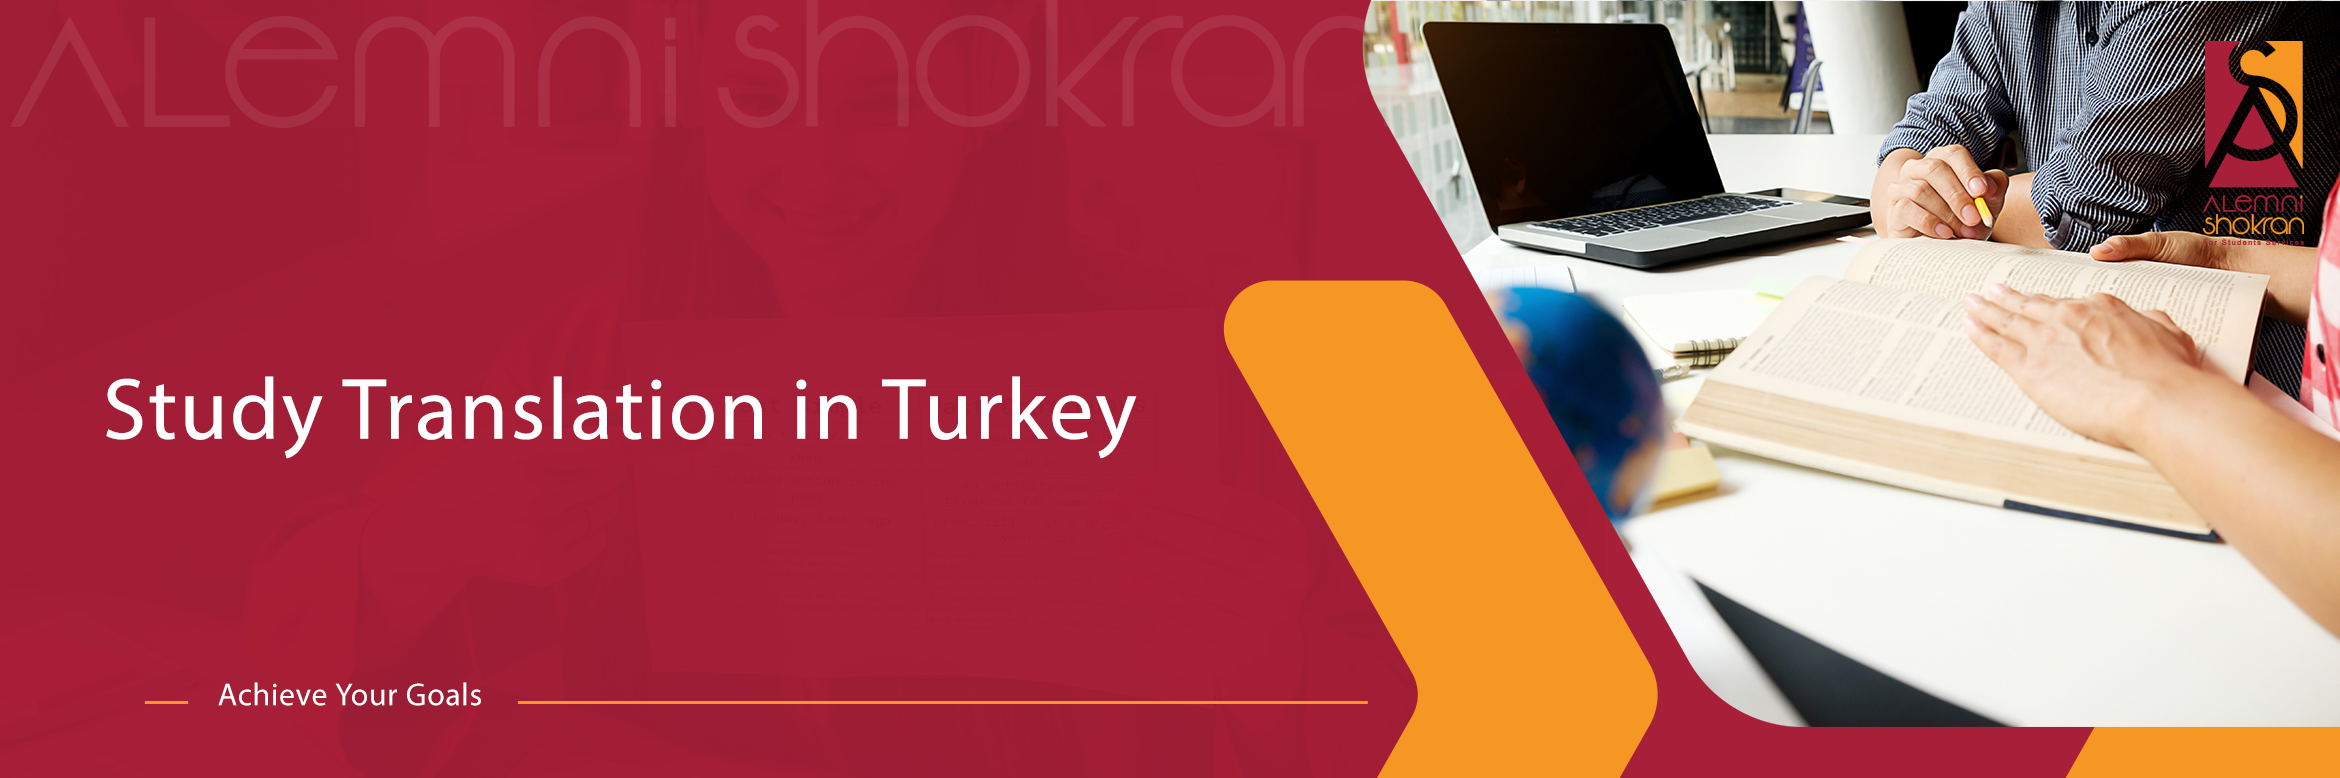 Study Translation in Turkey